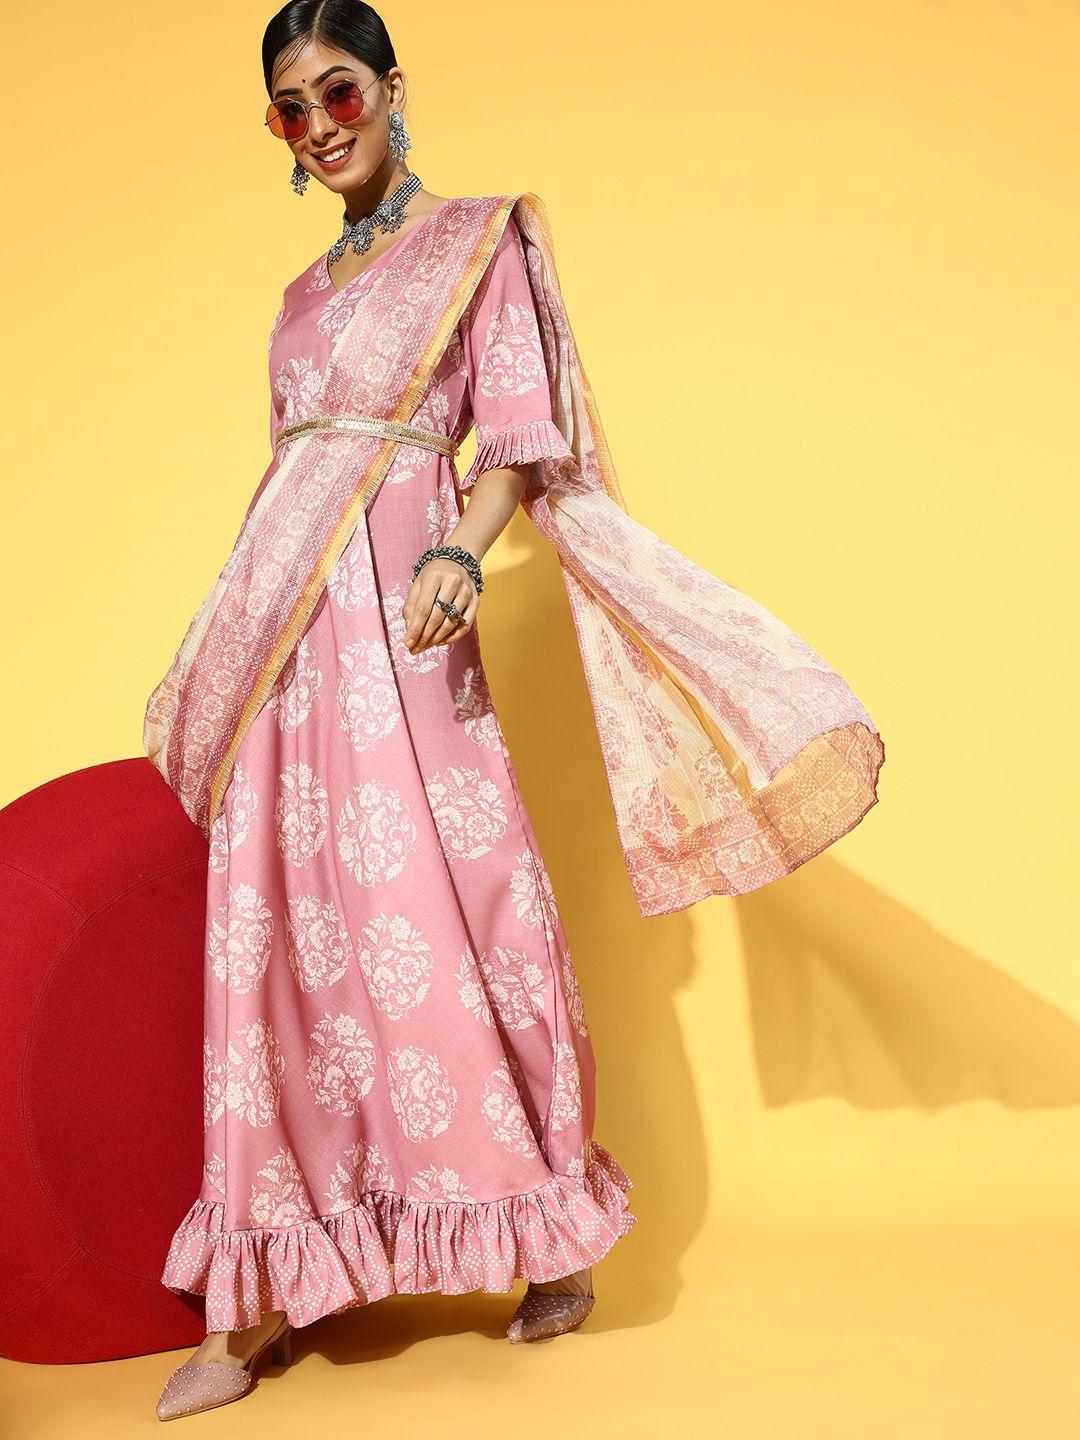 yufta-women-pretty-pink-ethnic-motifs-draped-luxe-dress